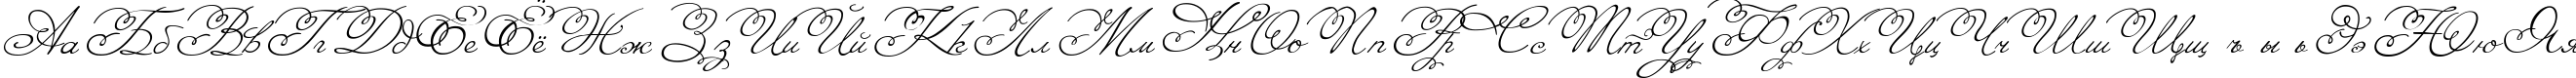 Пример написания русского алфавита шрифтом Angelica